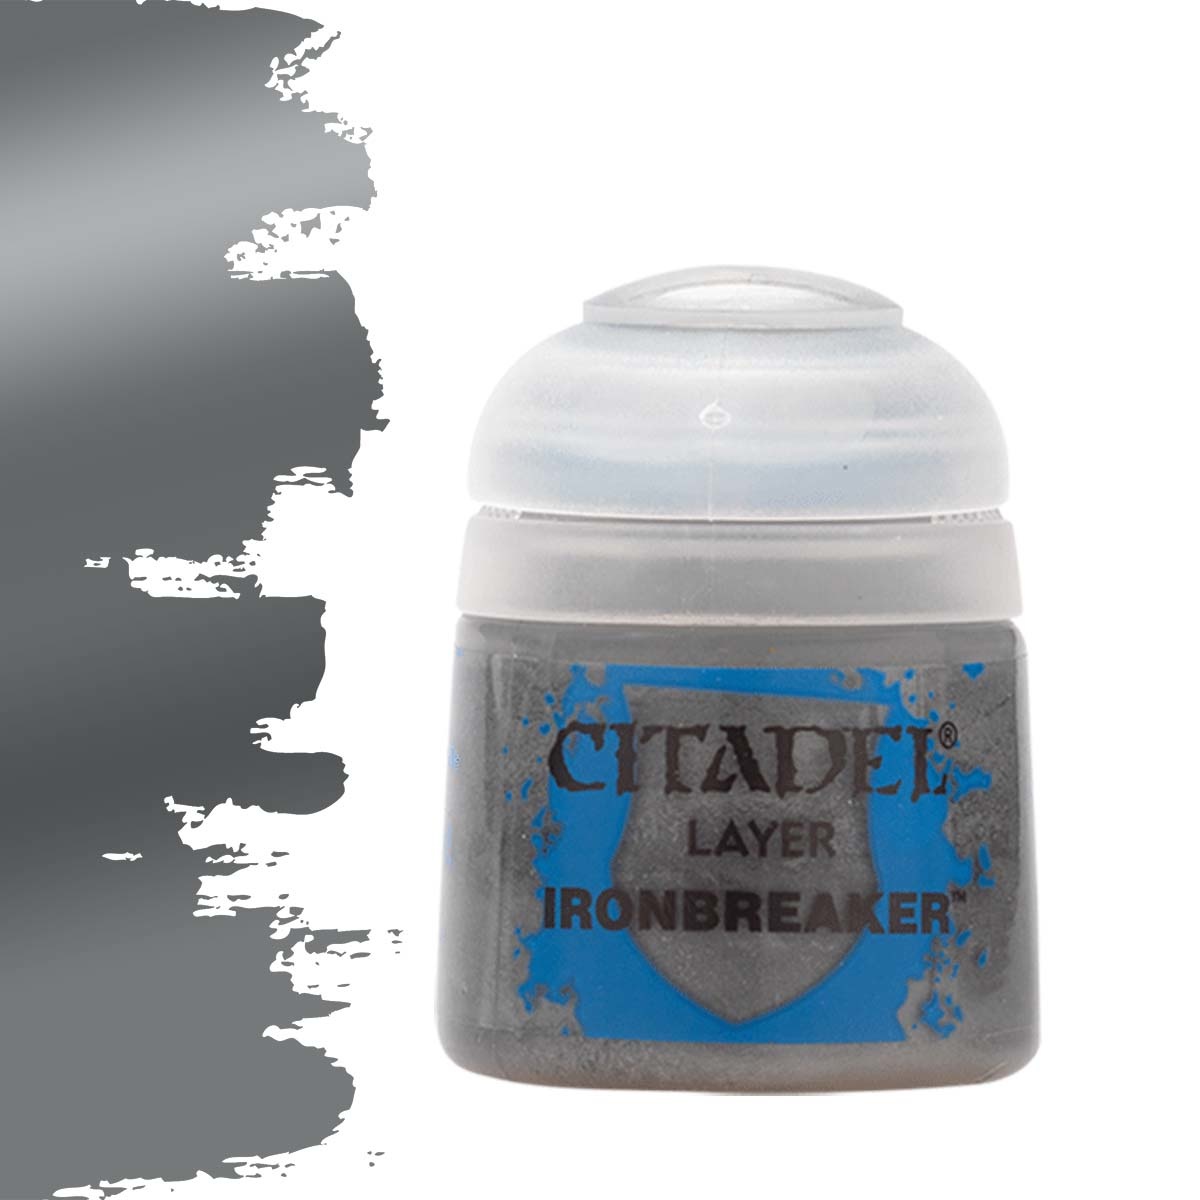 Citadel Ironbreaker - Layer Paint - 12ml - 22-59 - Buy now at Scenery ...